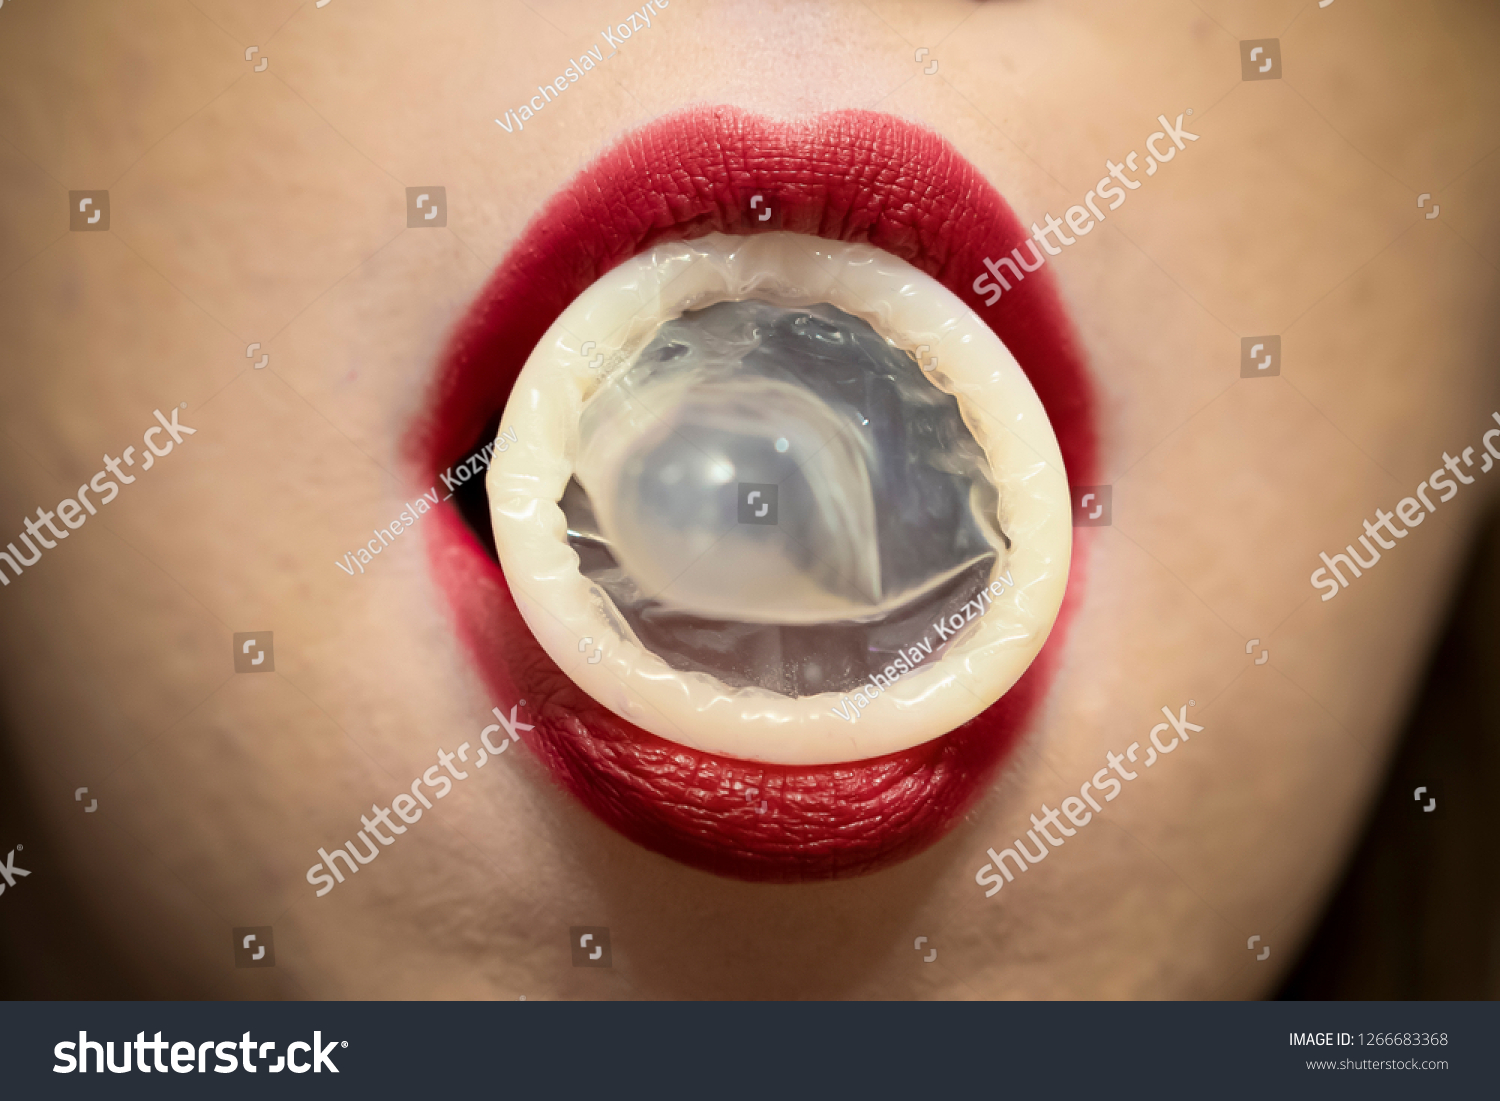 Sex Lips